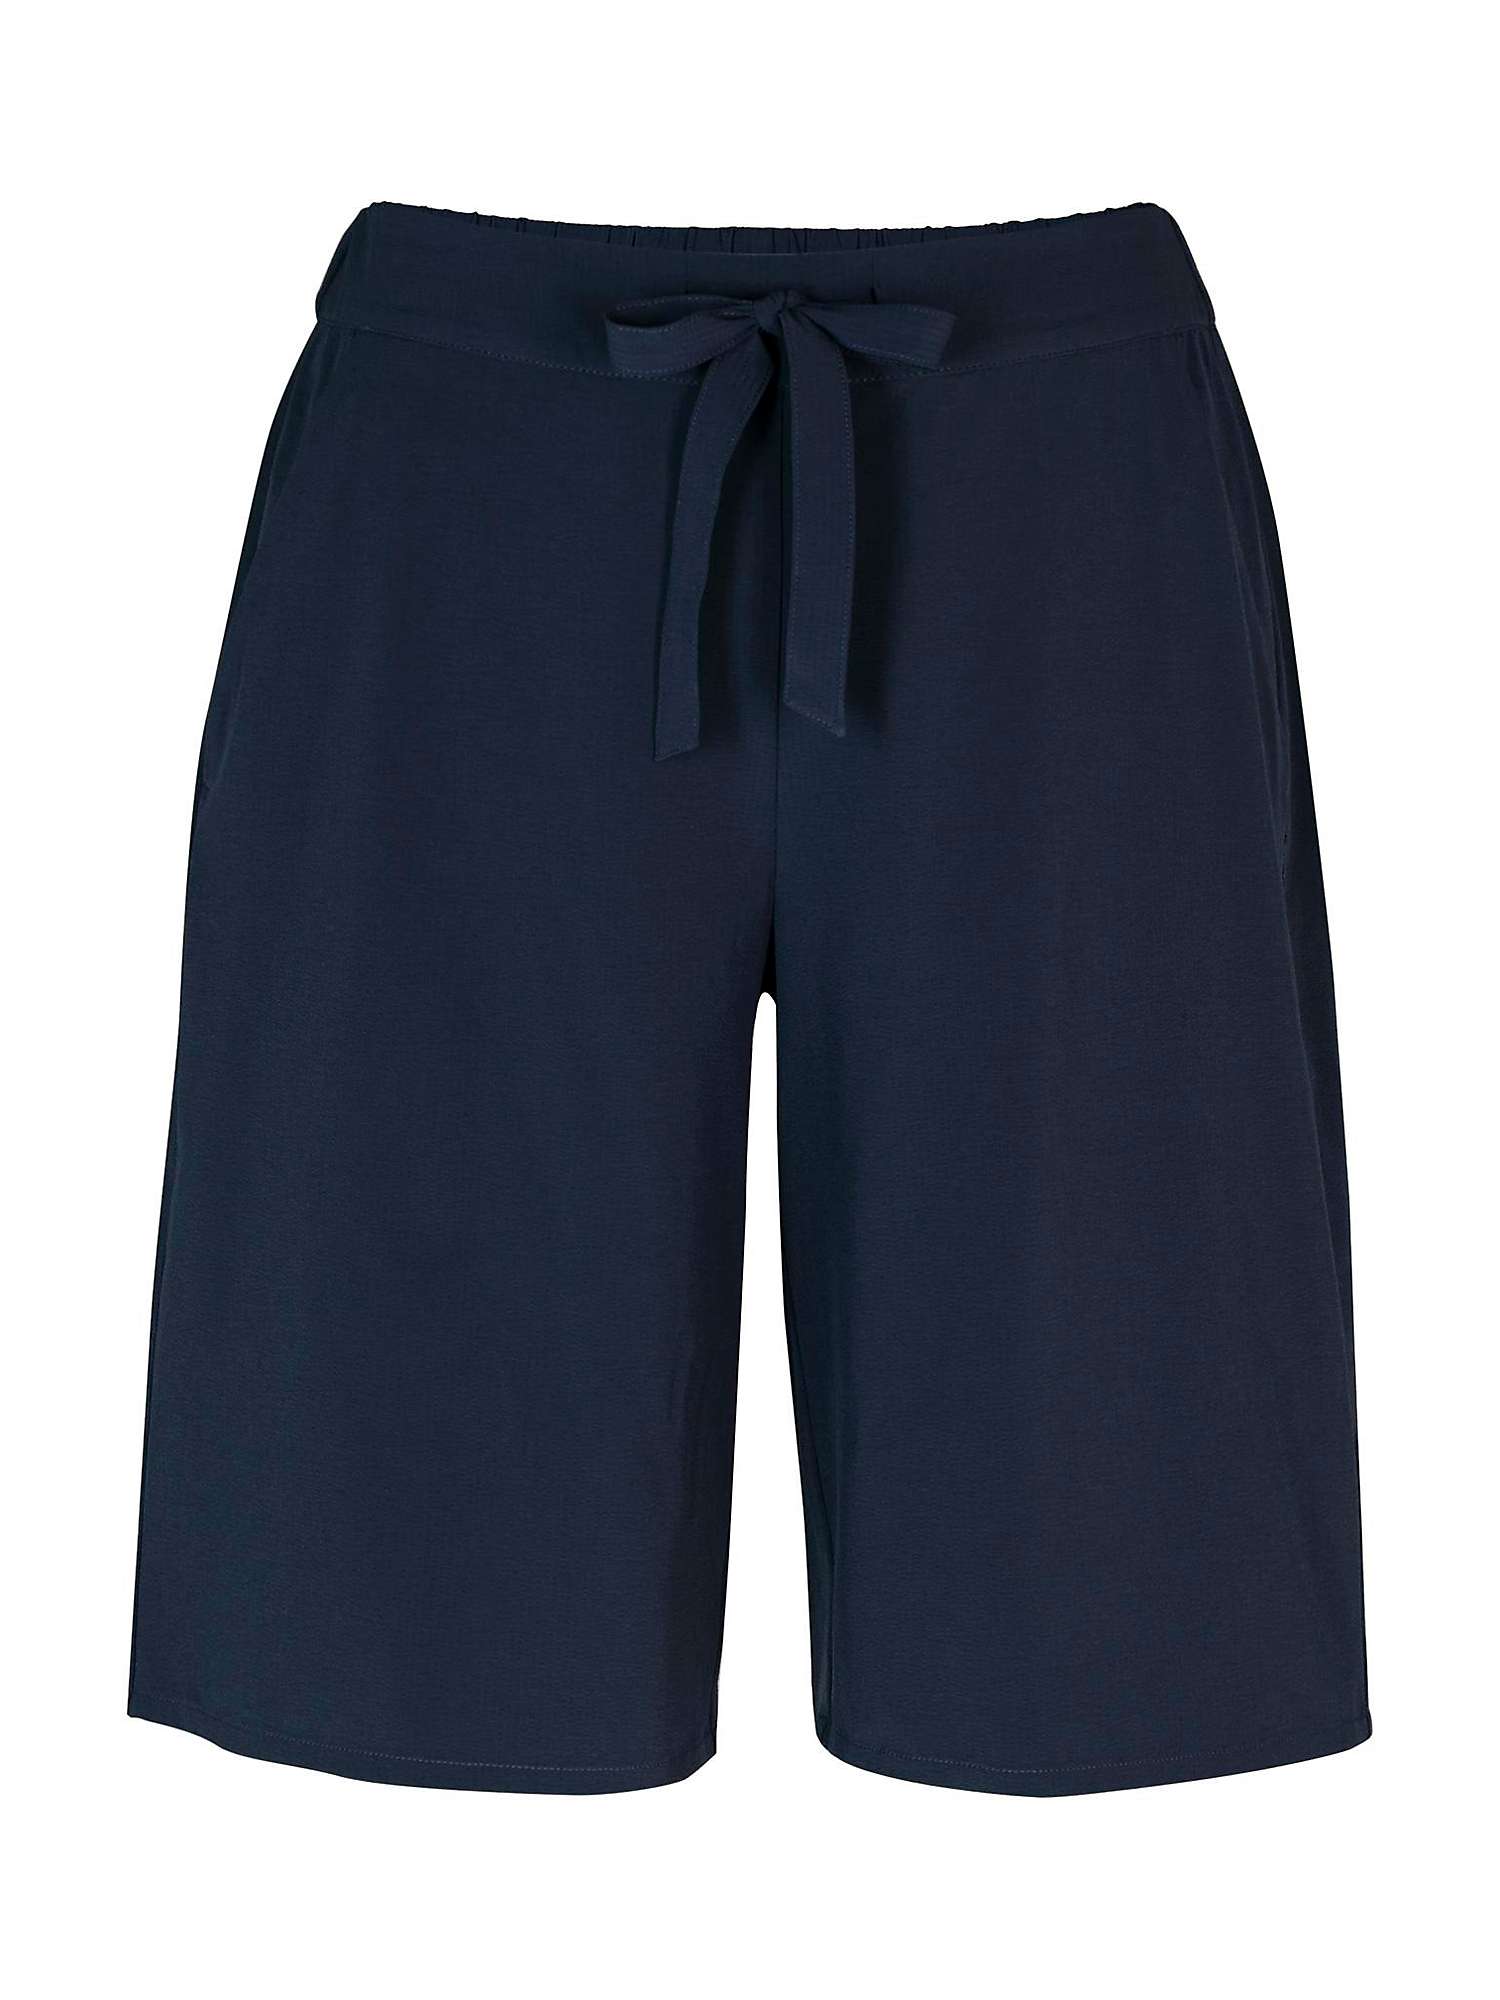 Buy Rohan Azul Long Shorts, True Navy Online at johnlewis.com